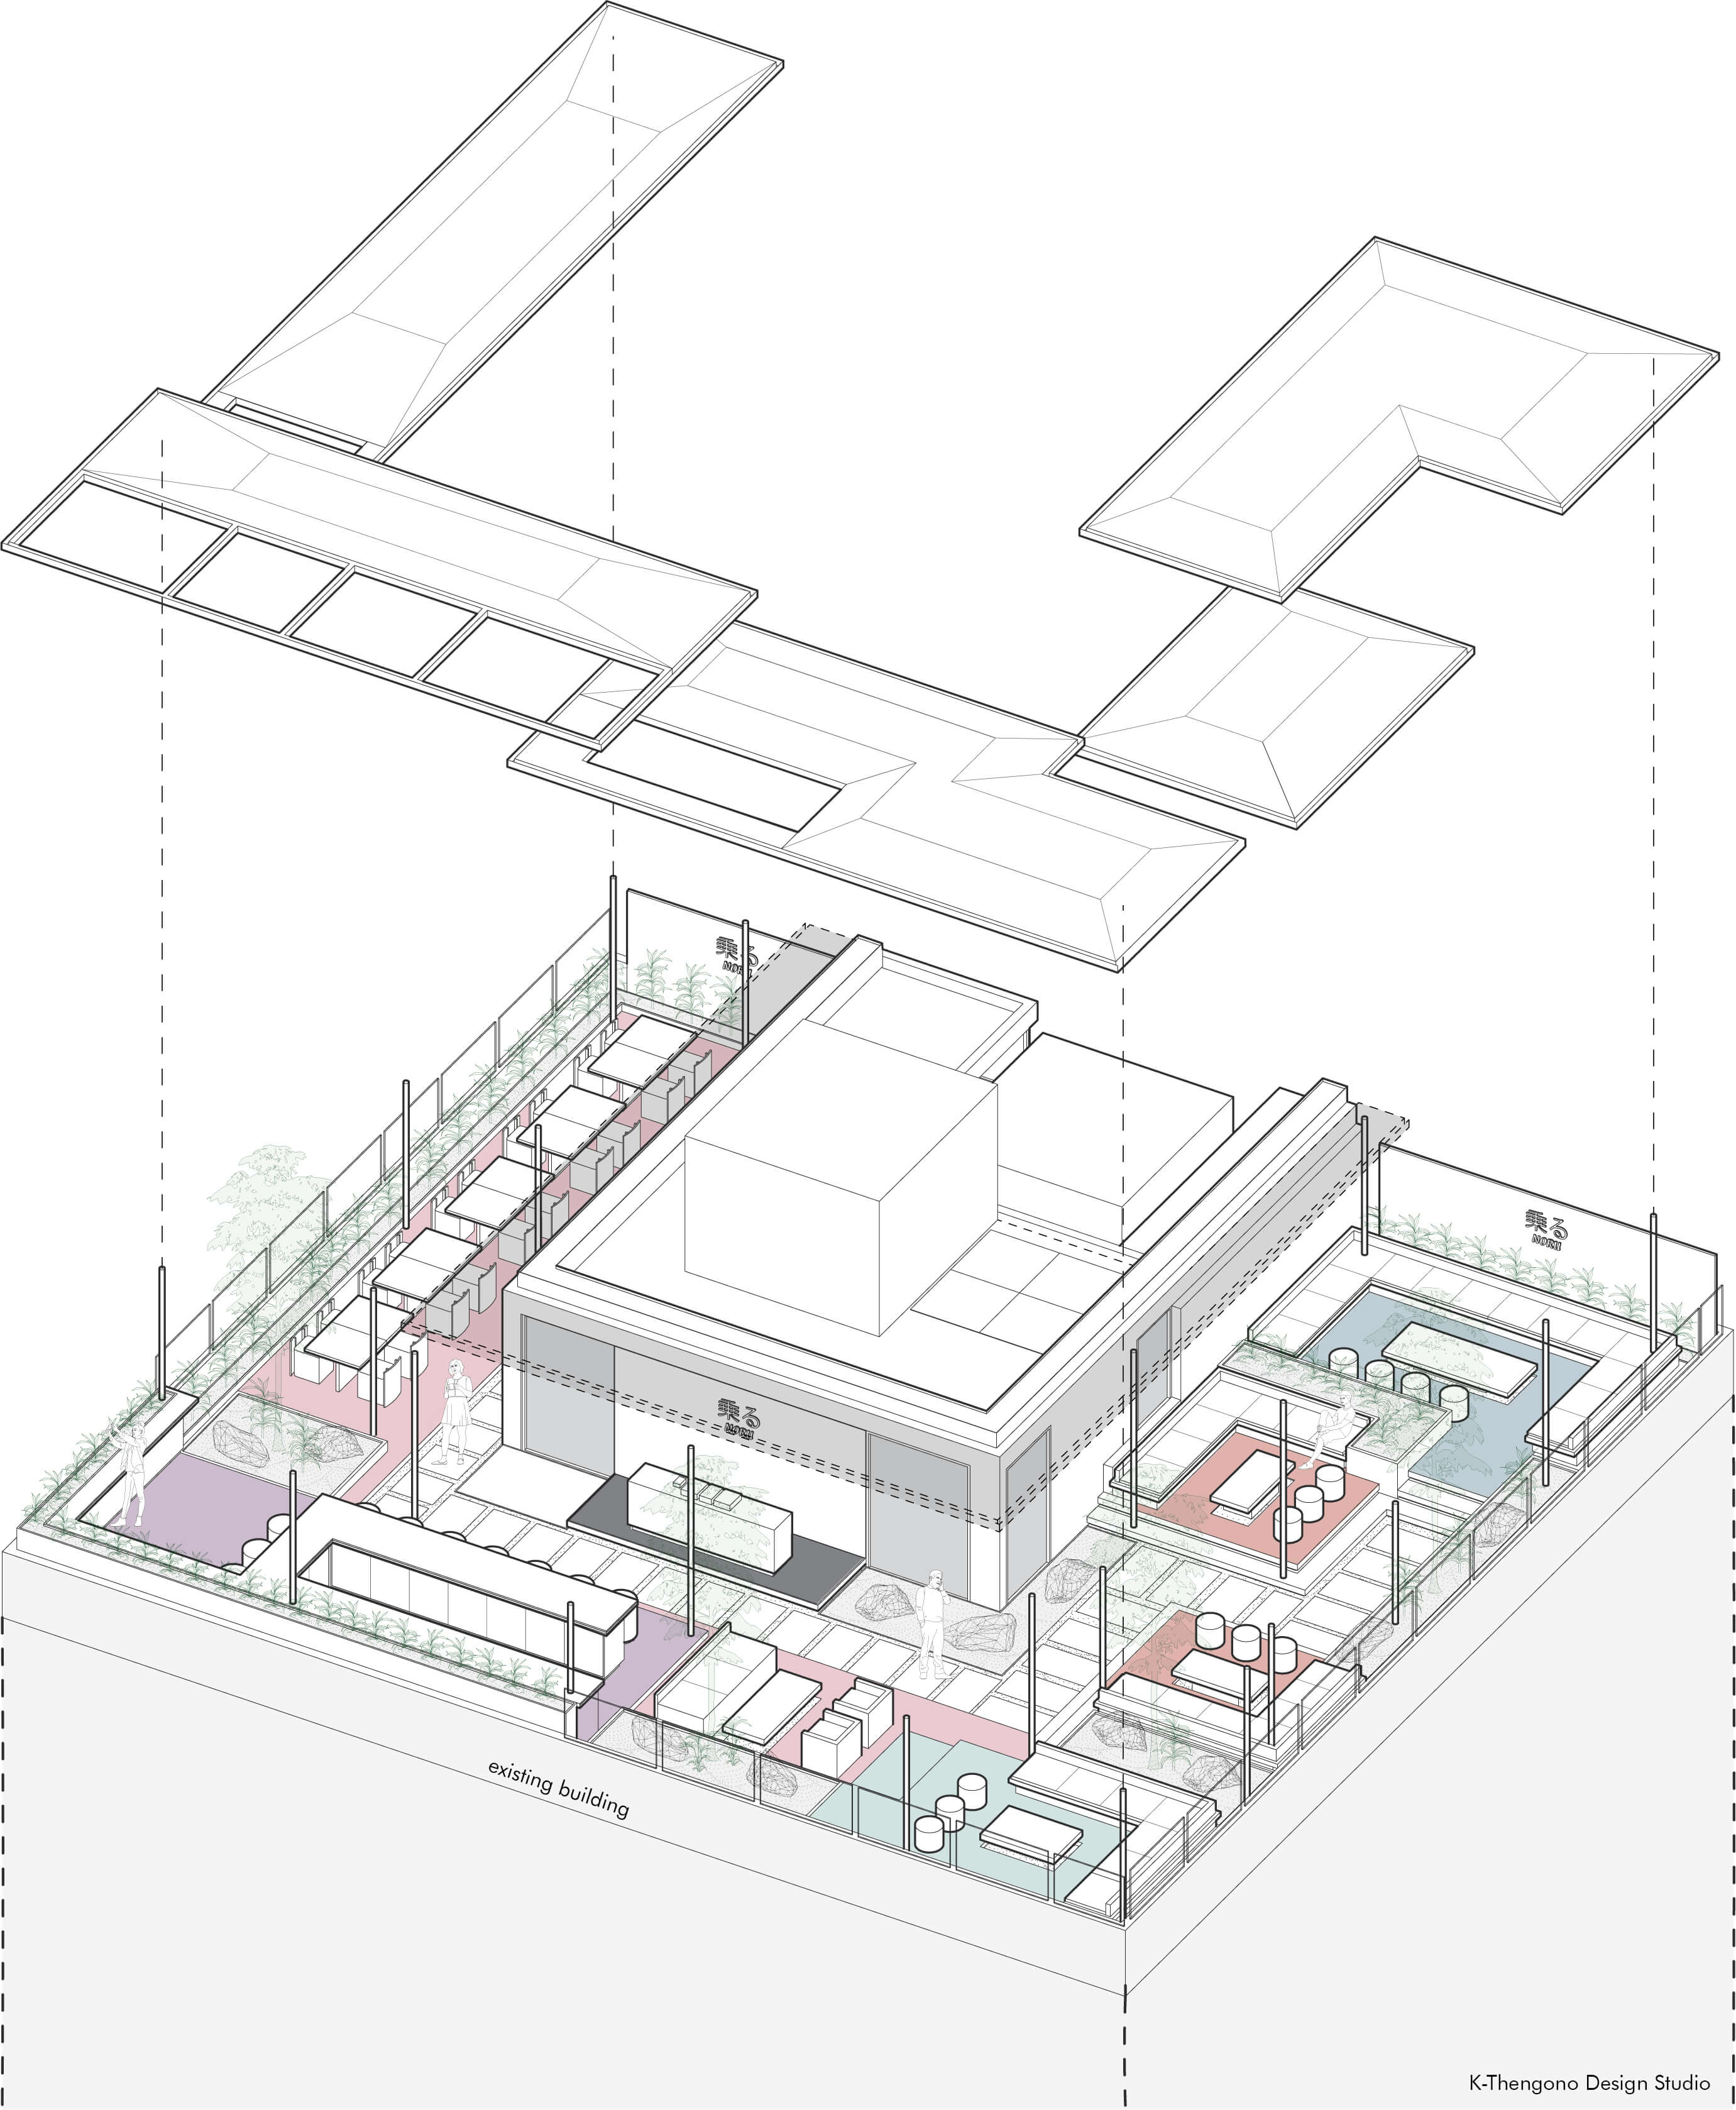 NORU's plan by K-Thengono Design Studio